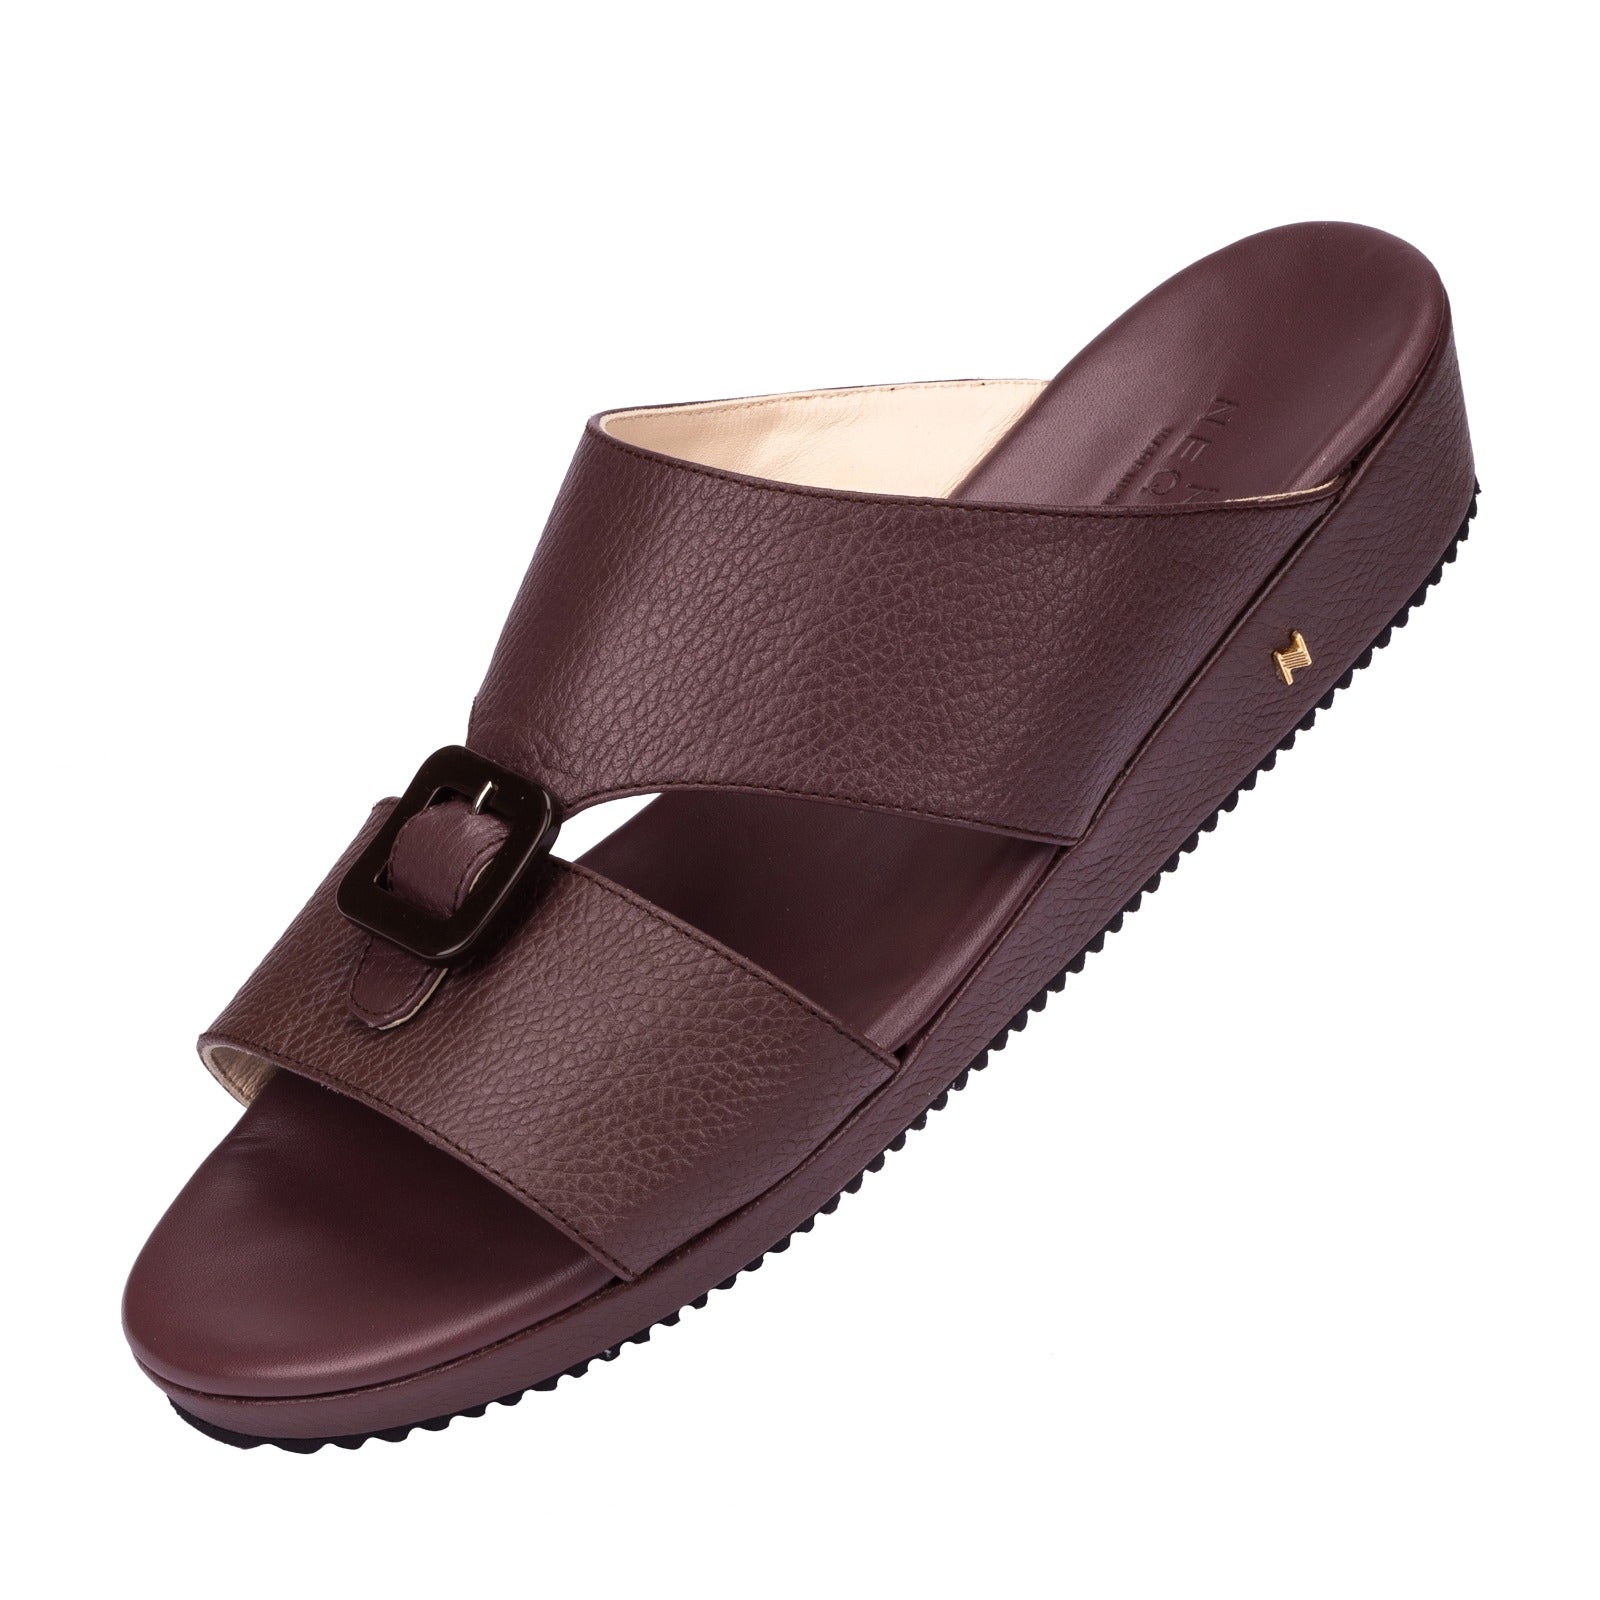 Neqwa CÓRDOBA Jute Collection Sandals - Maroon Brown Calfskin Leather